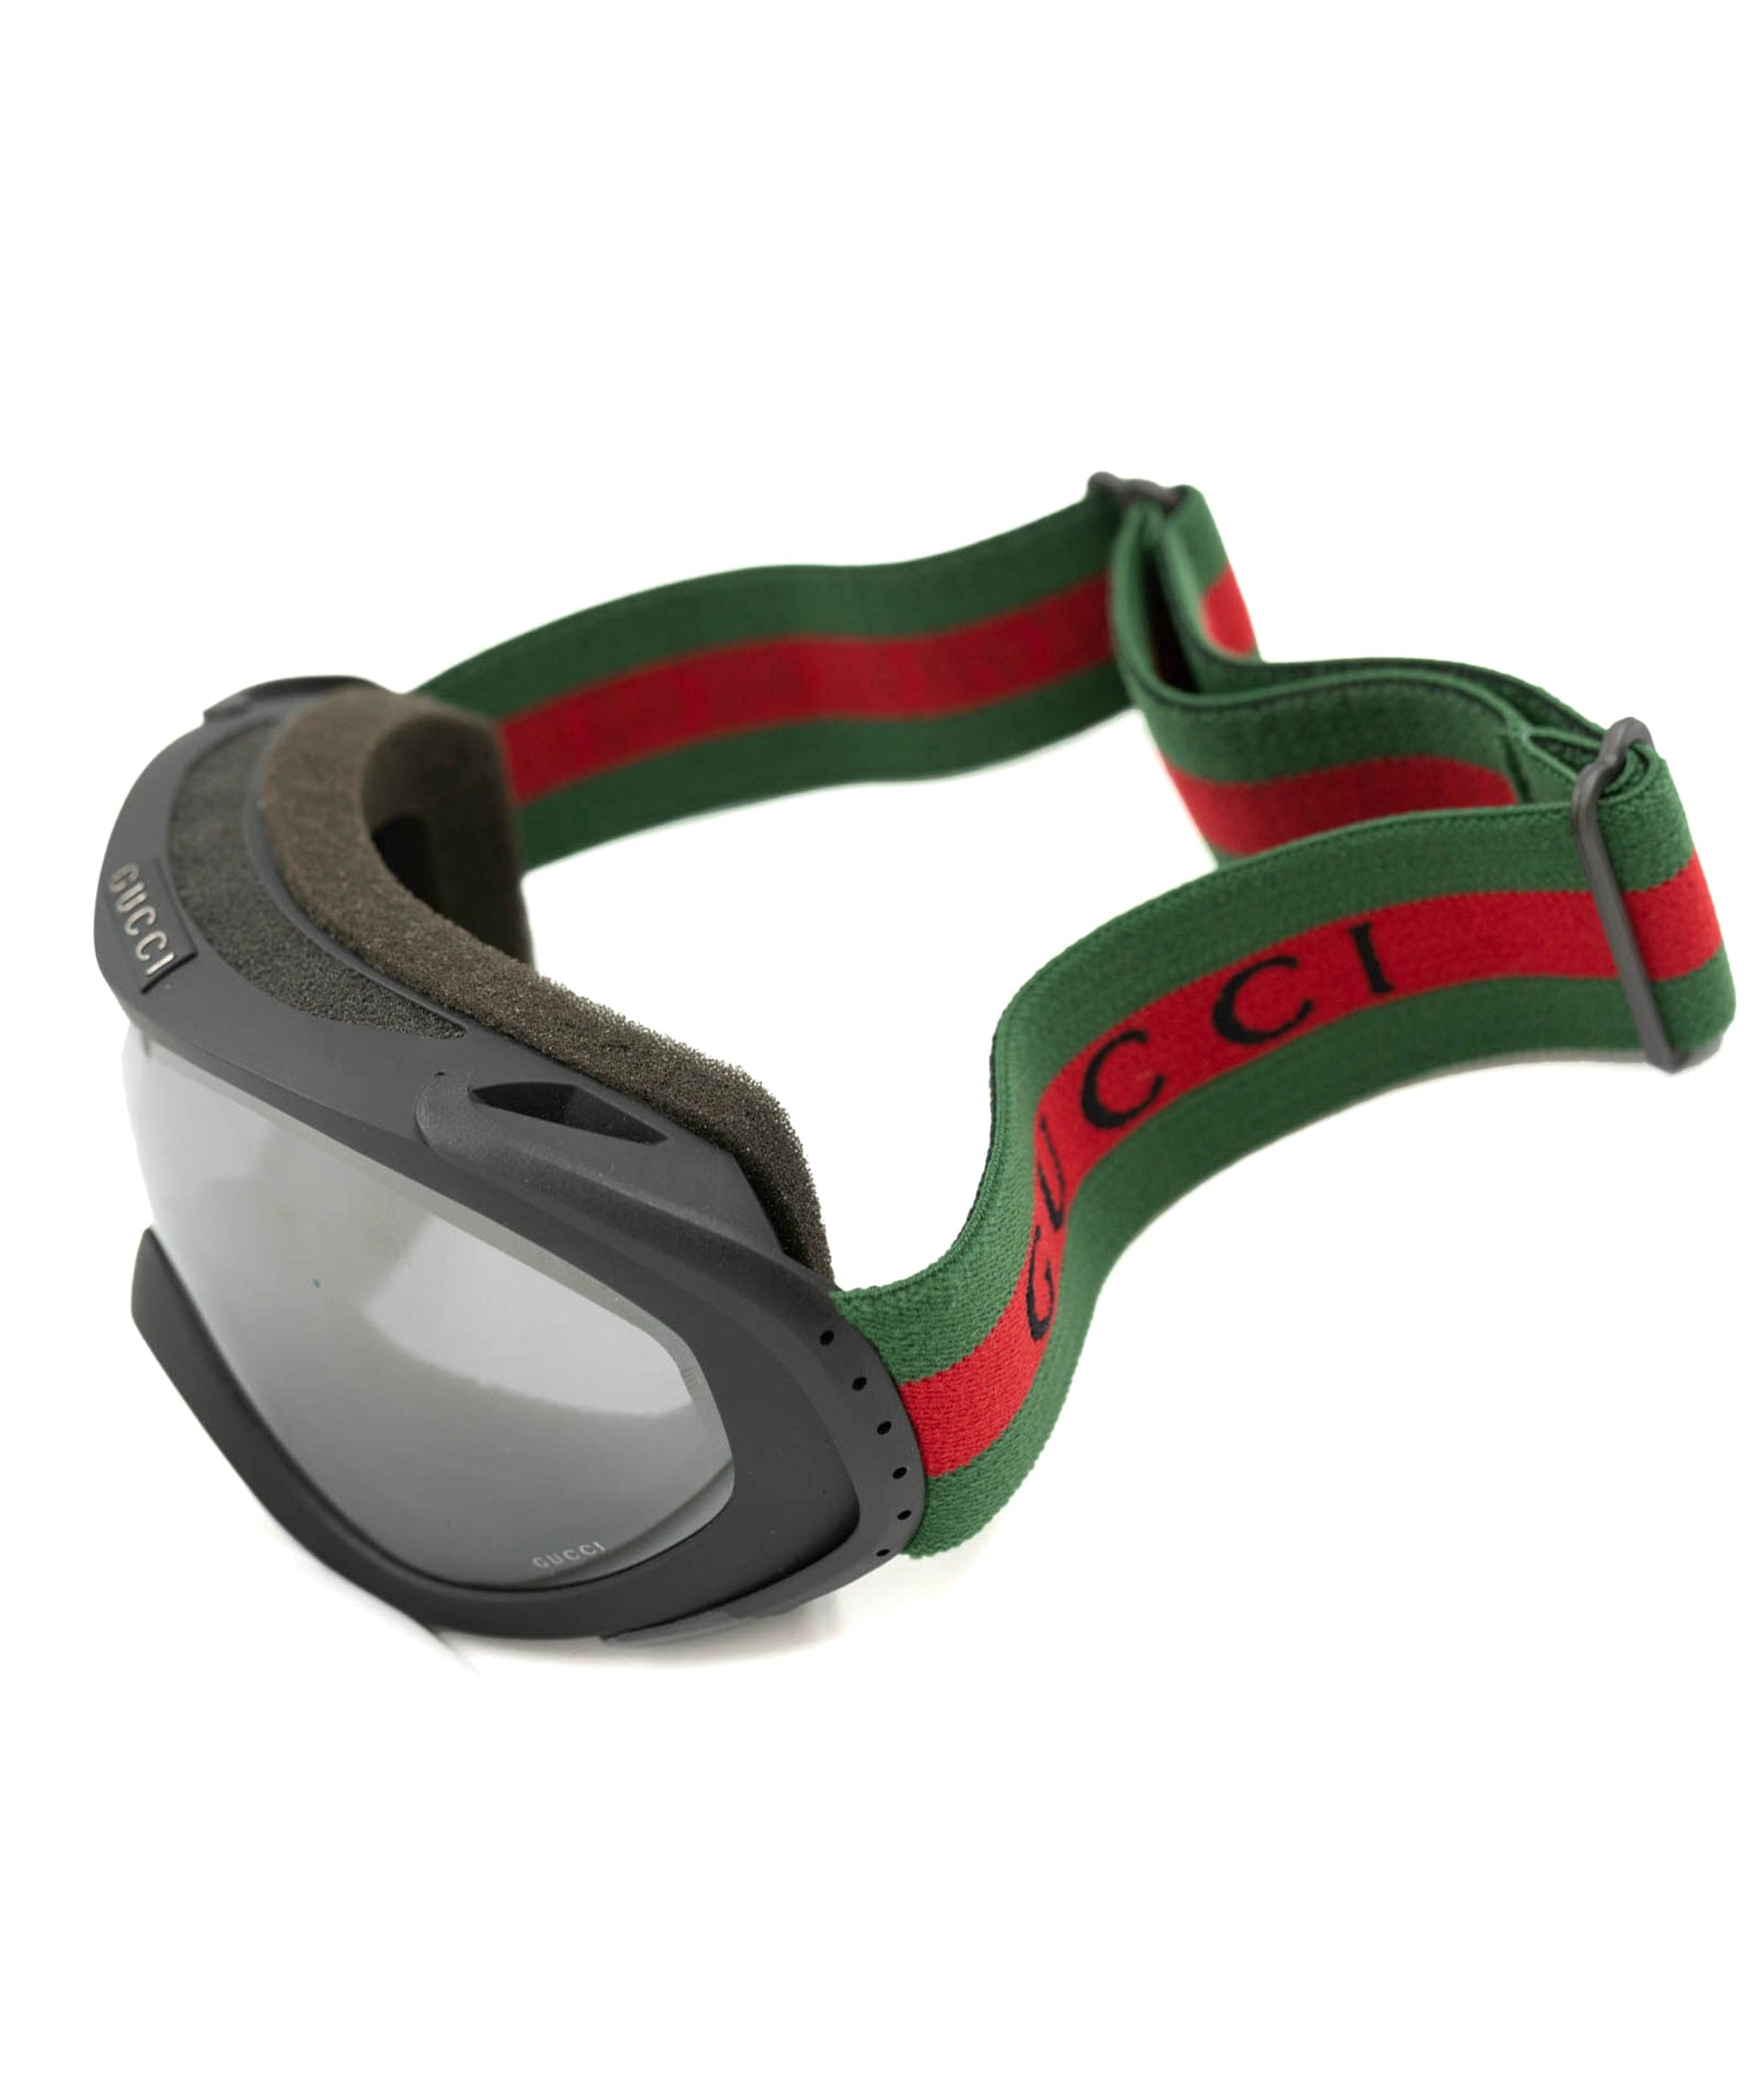 Gucci Gucci Ski Green and Red Elasstic Goggles - AWL3977